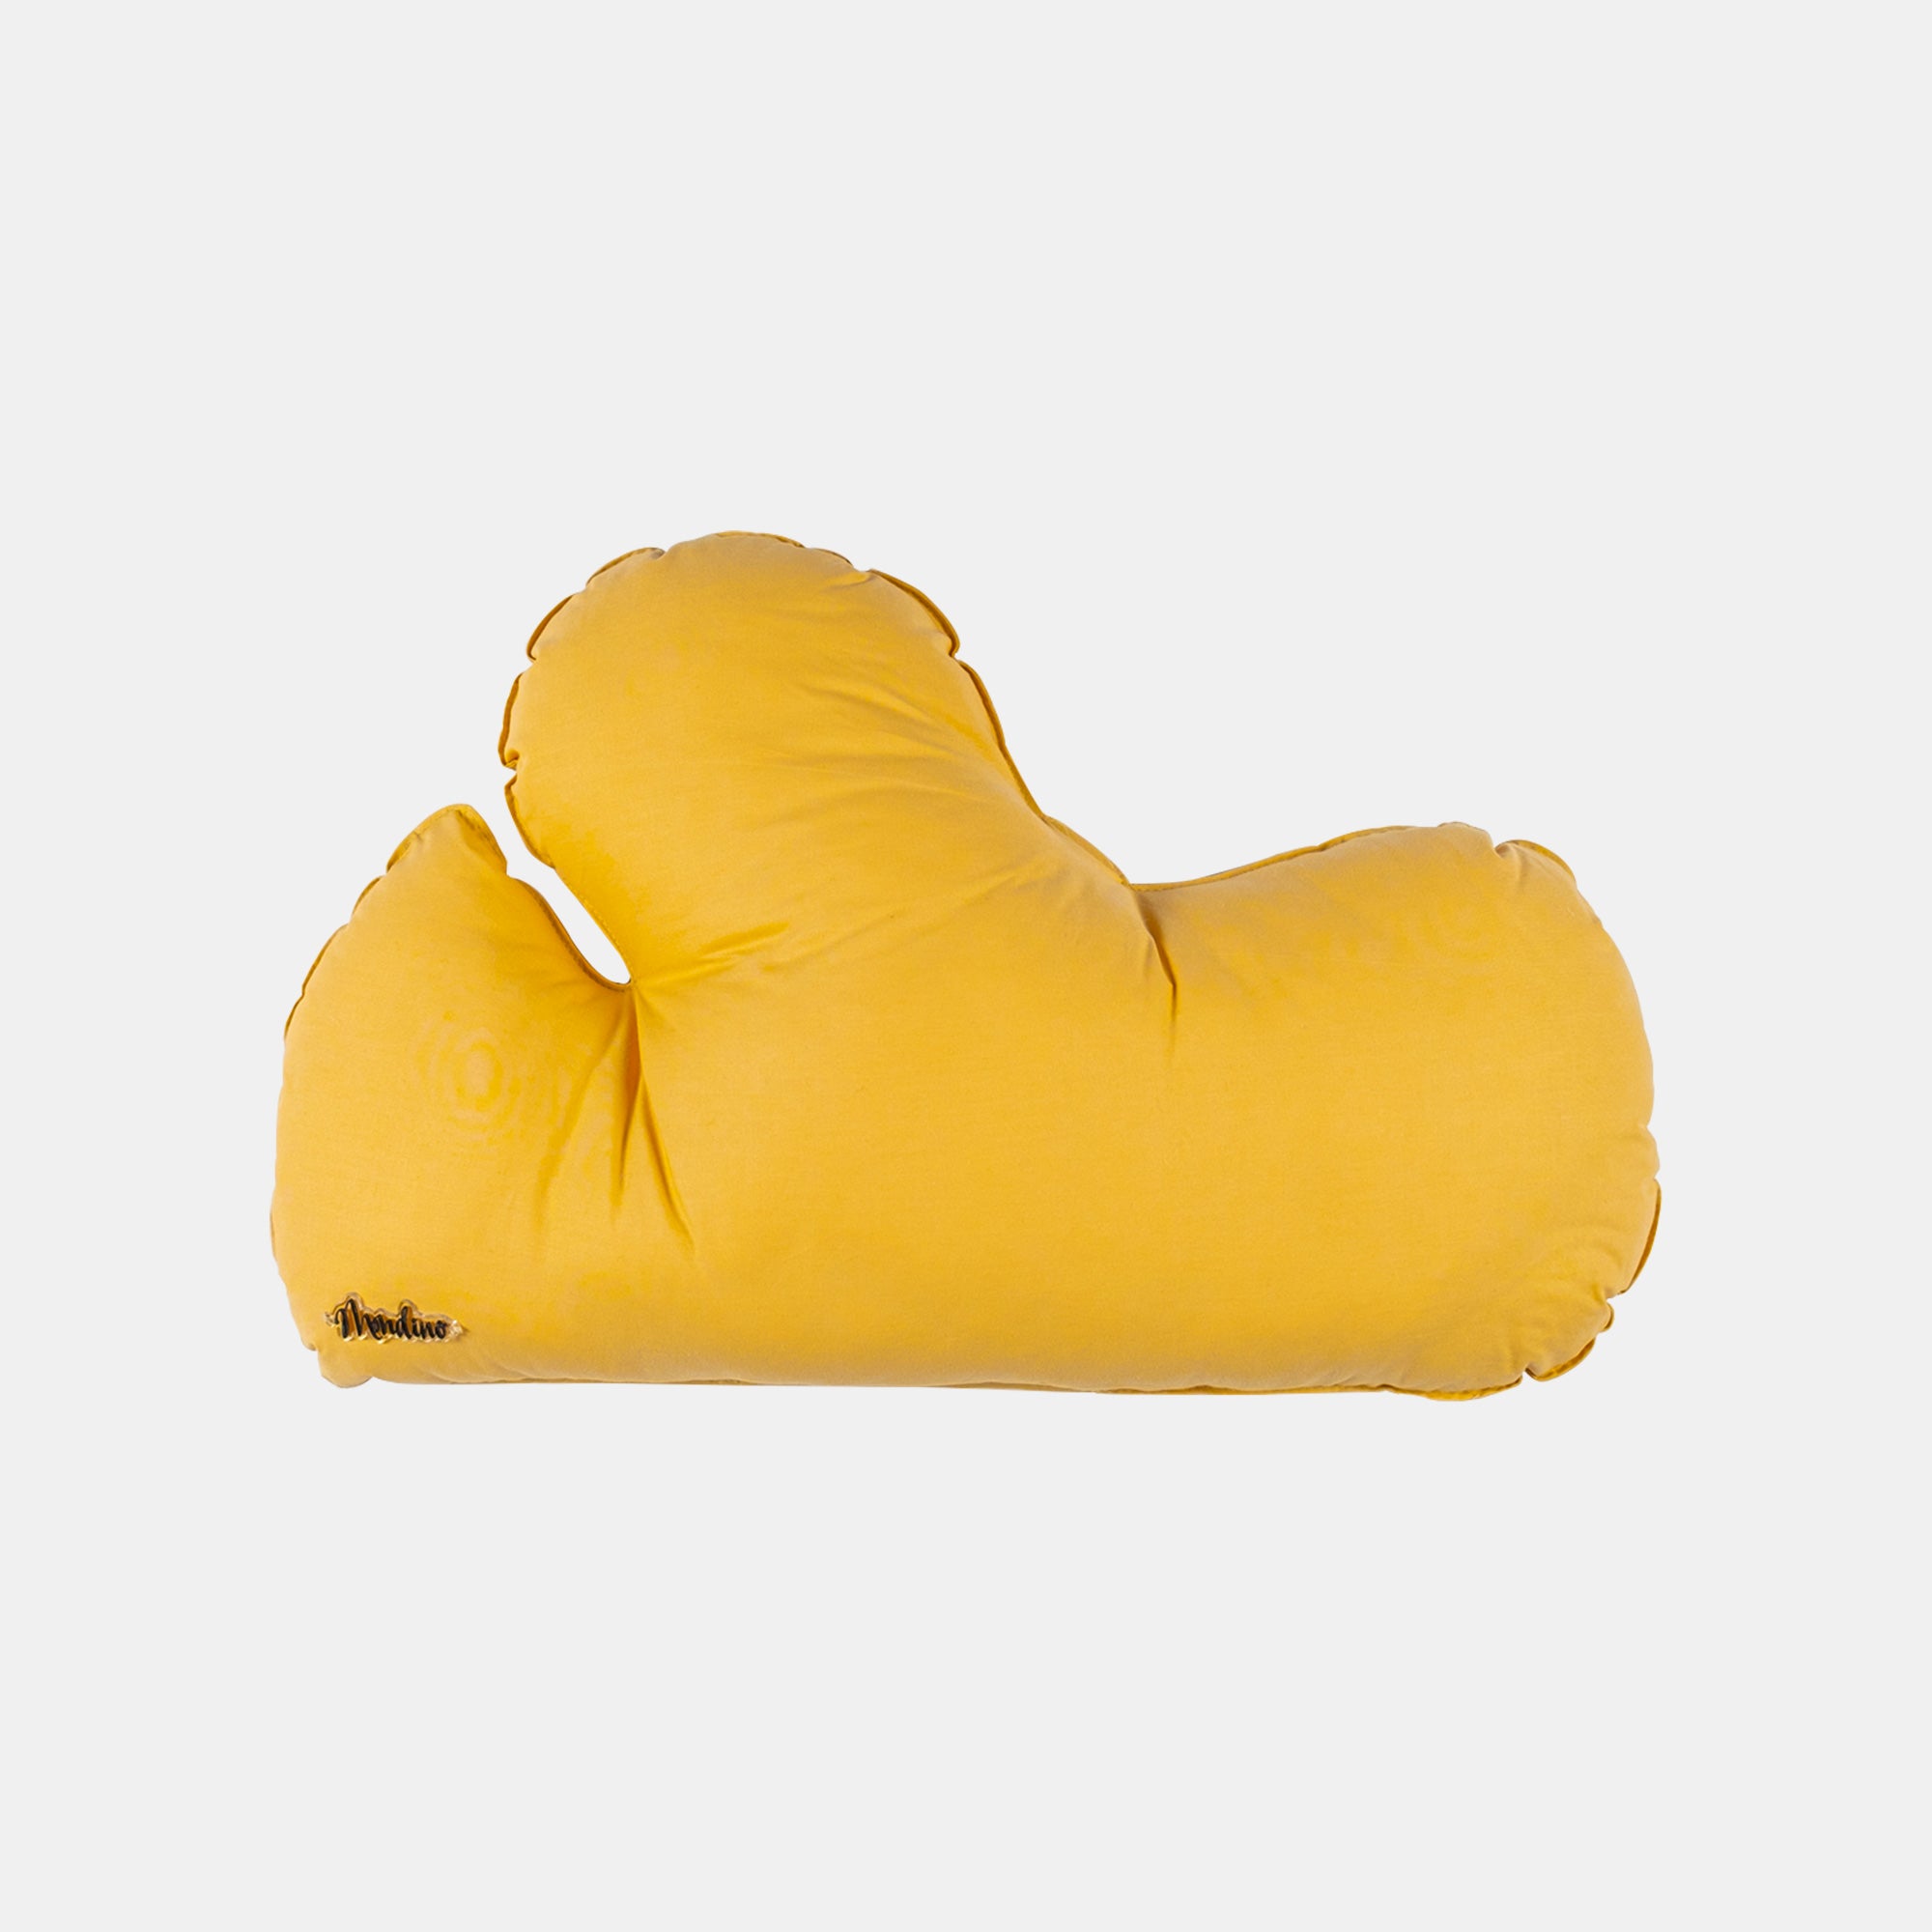 Handmade cloud-shaped cushion